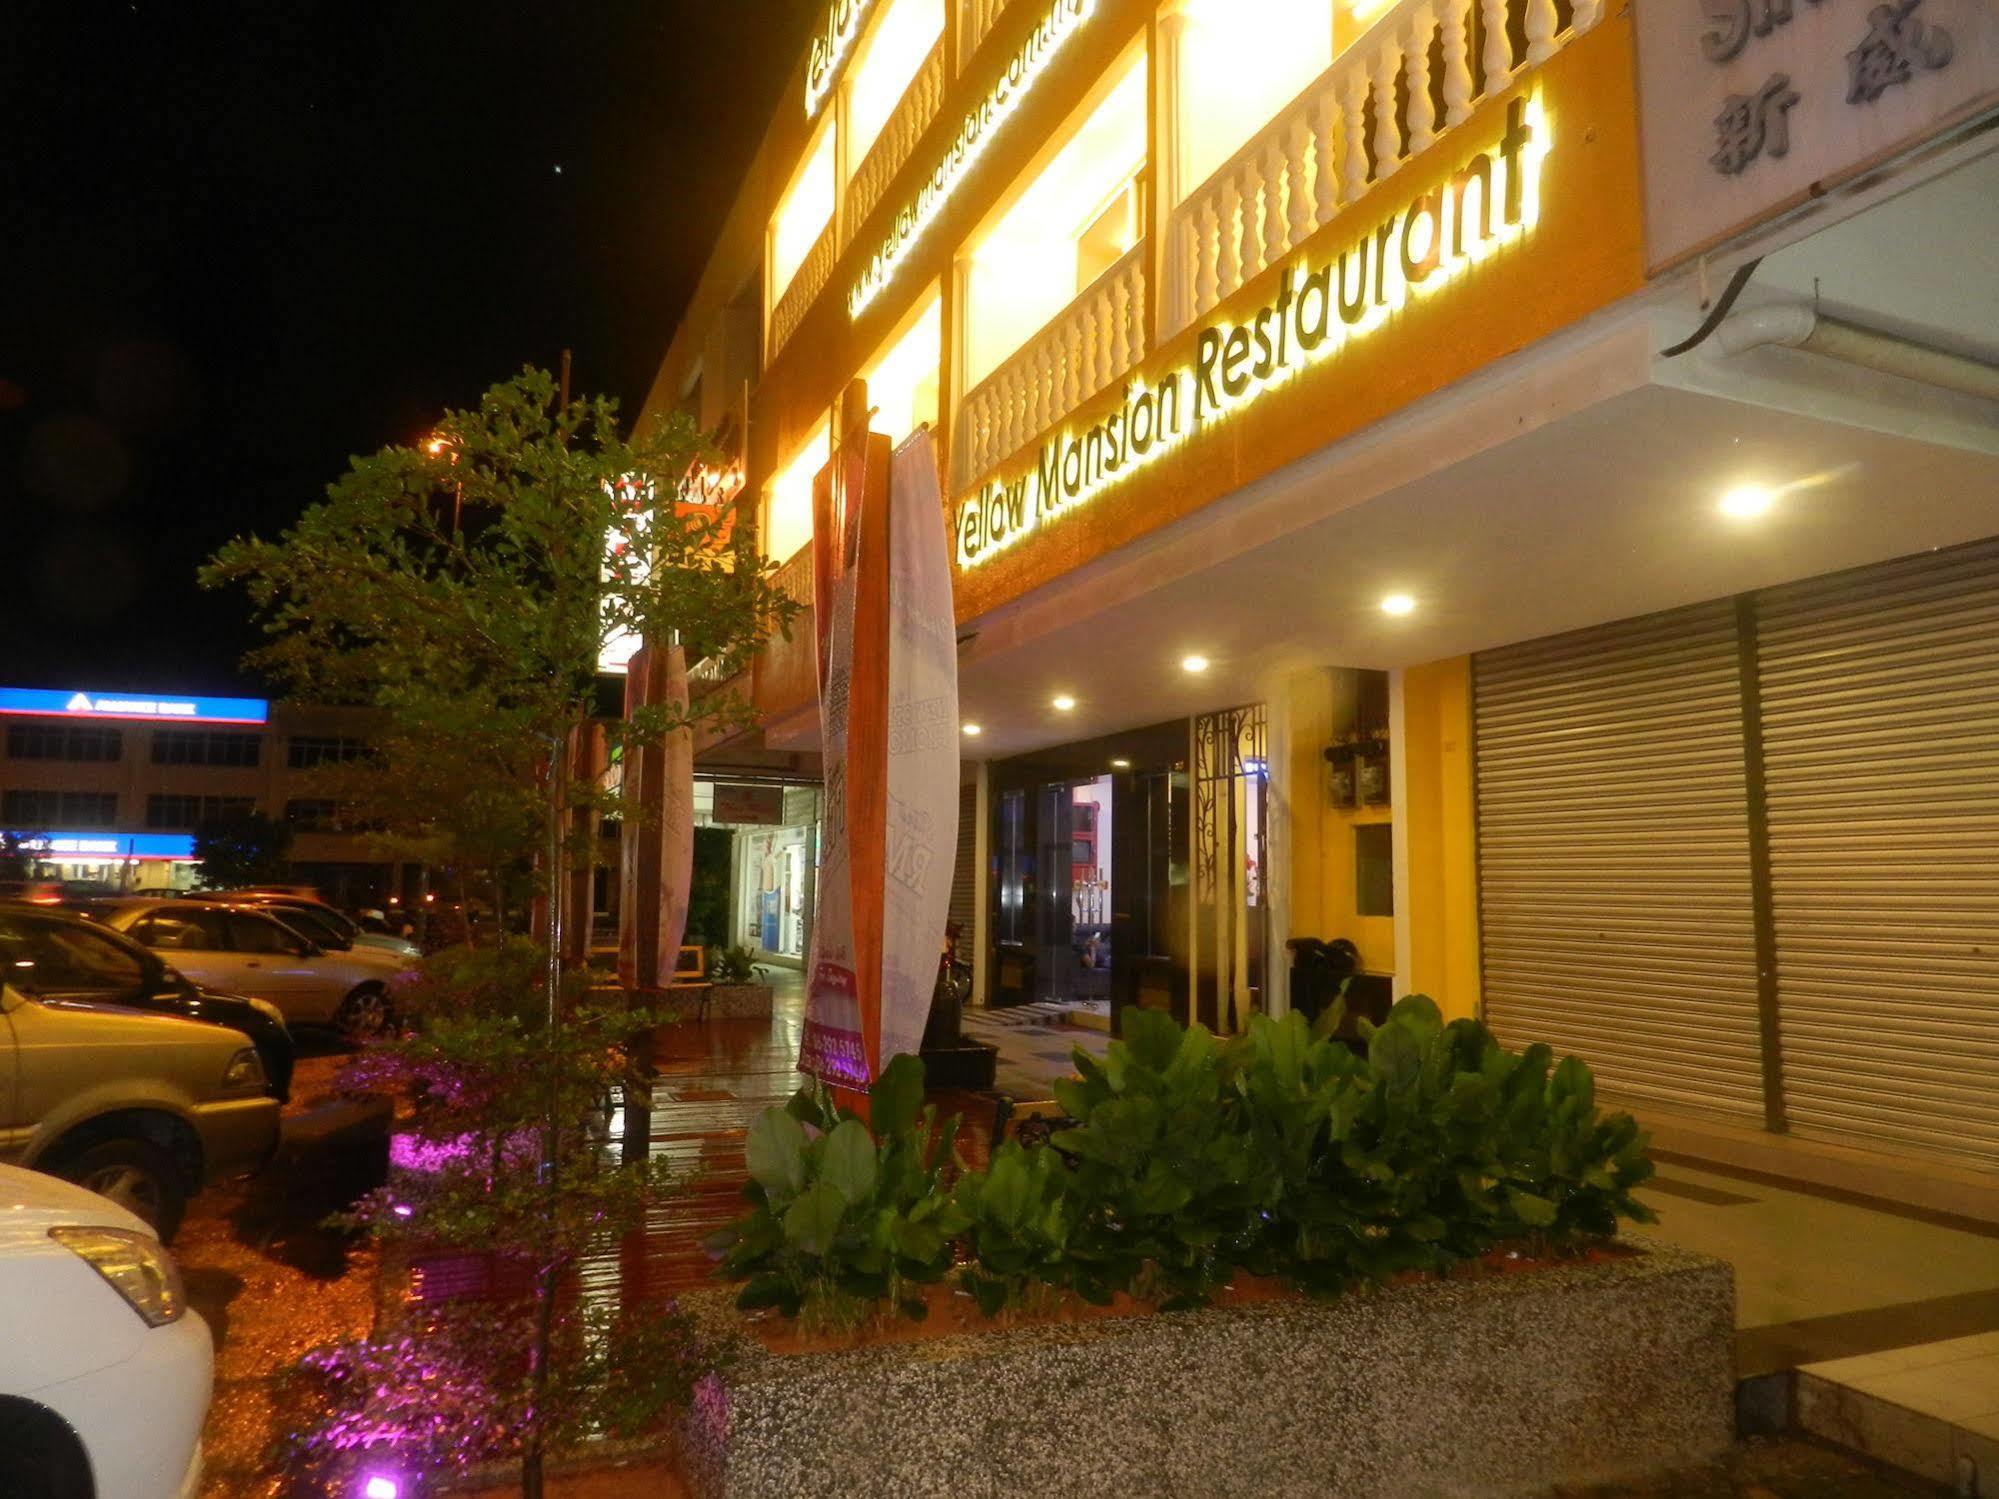 Yellow Mansion Hotel Melaka Raya Exterior photo